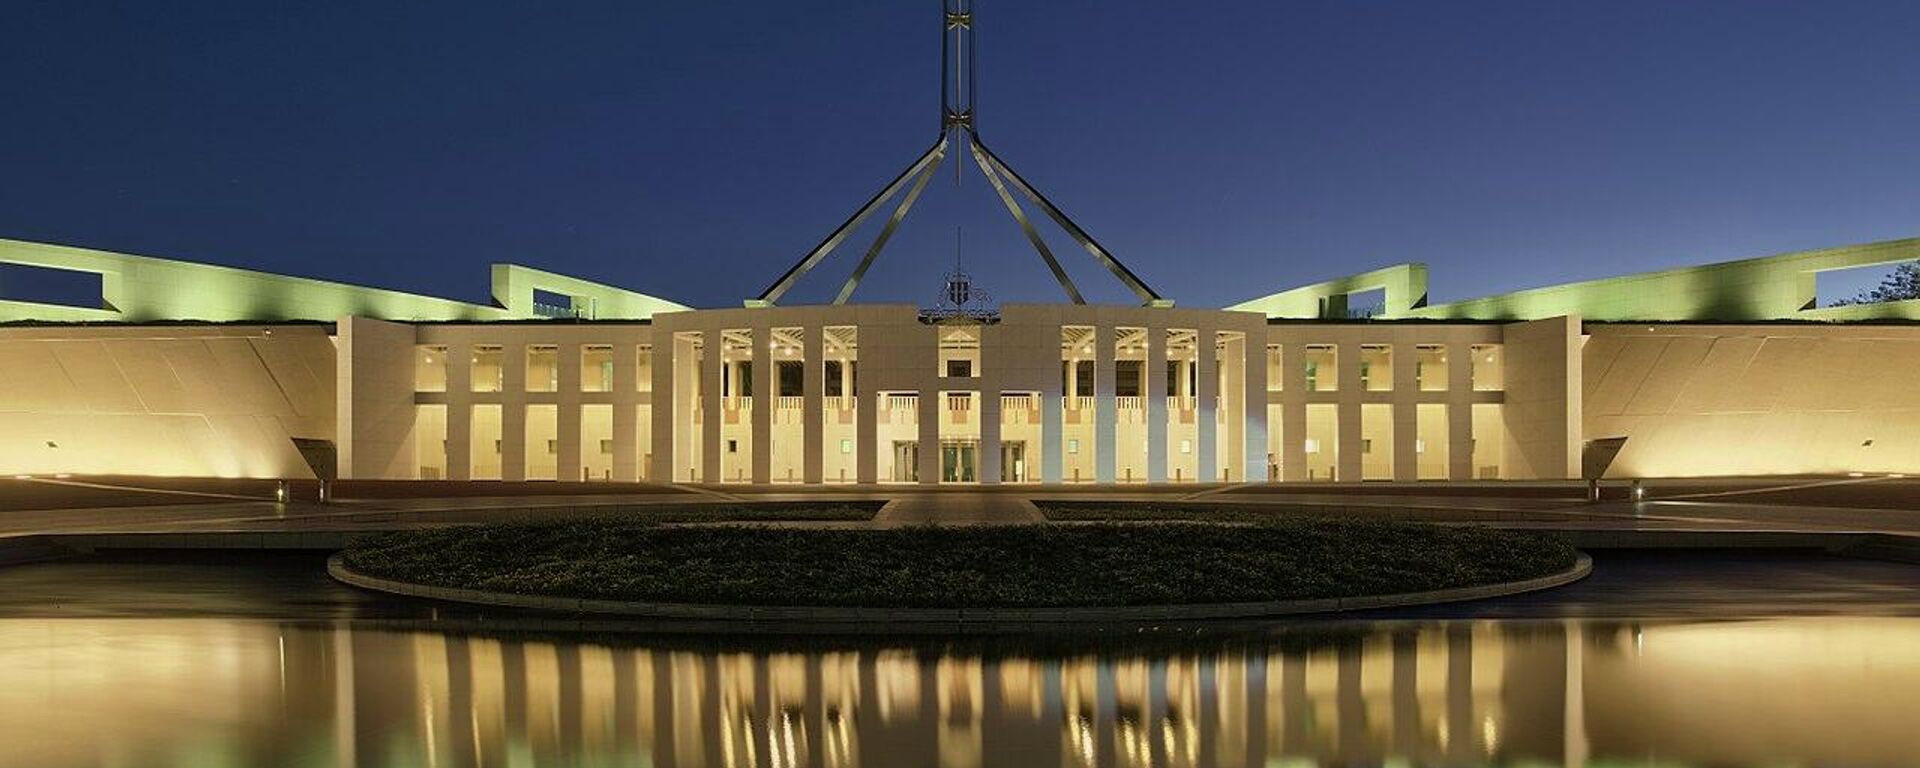 Parliament House Canberra, Australia - Sputnik International, 1920, 23.11.2021